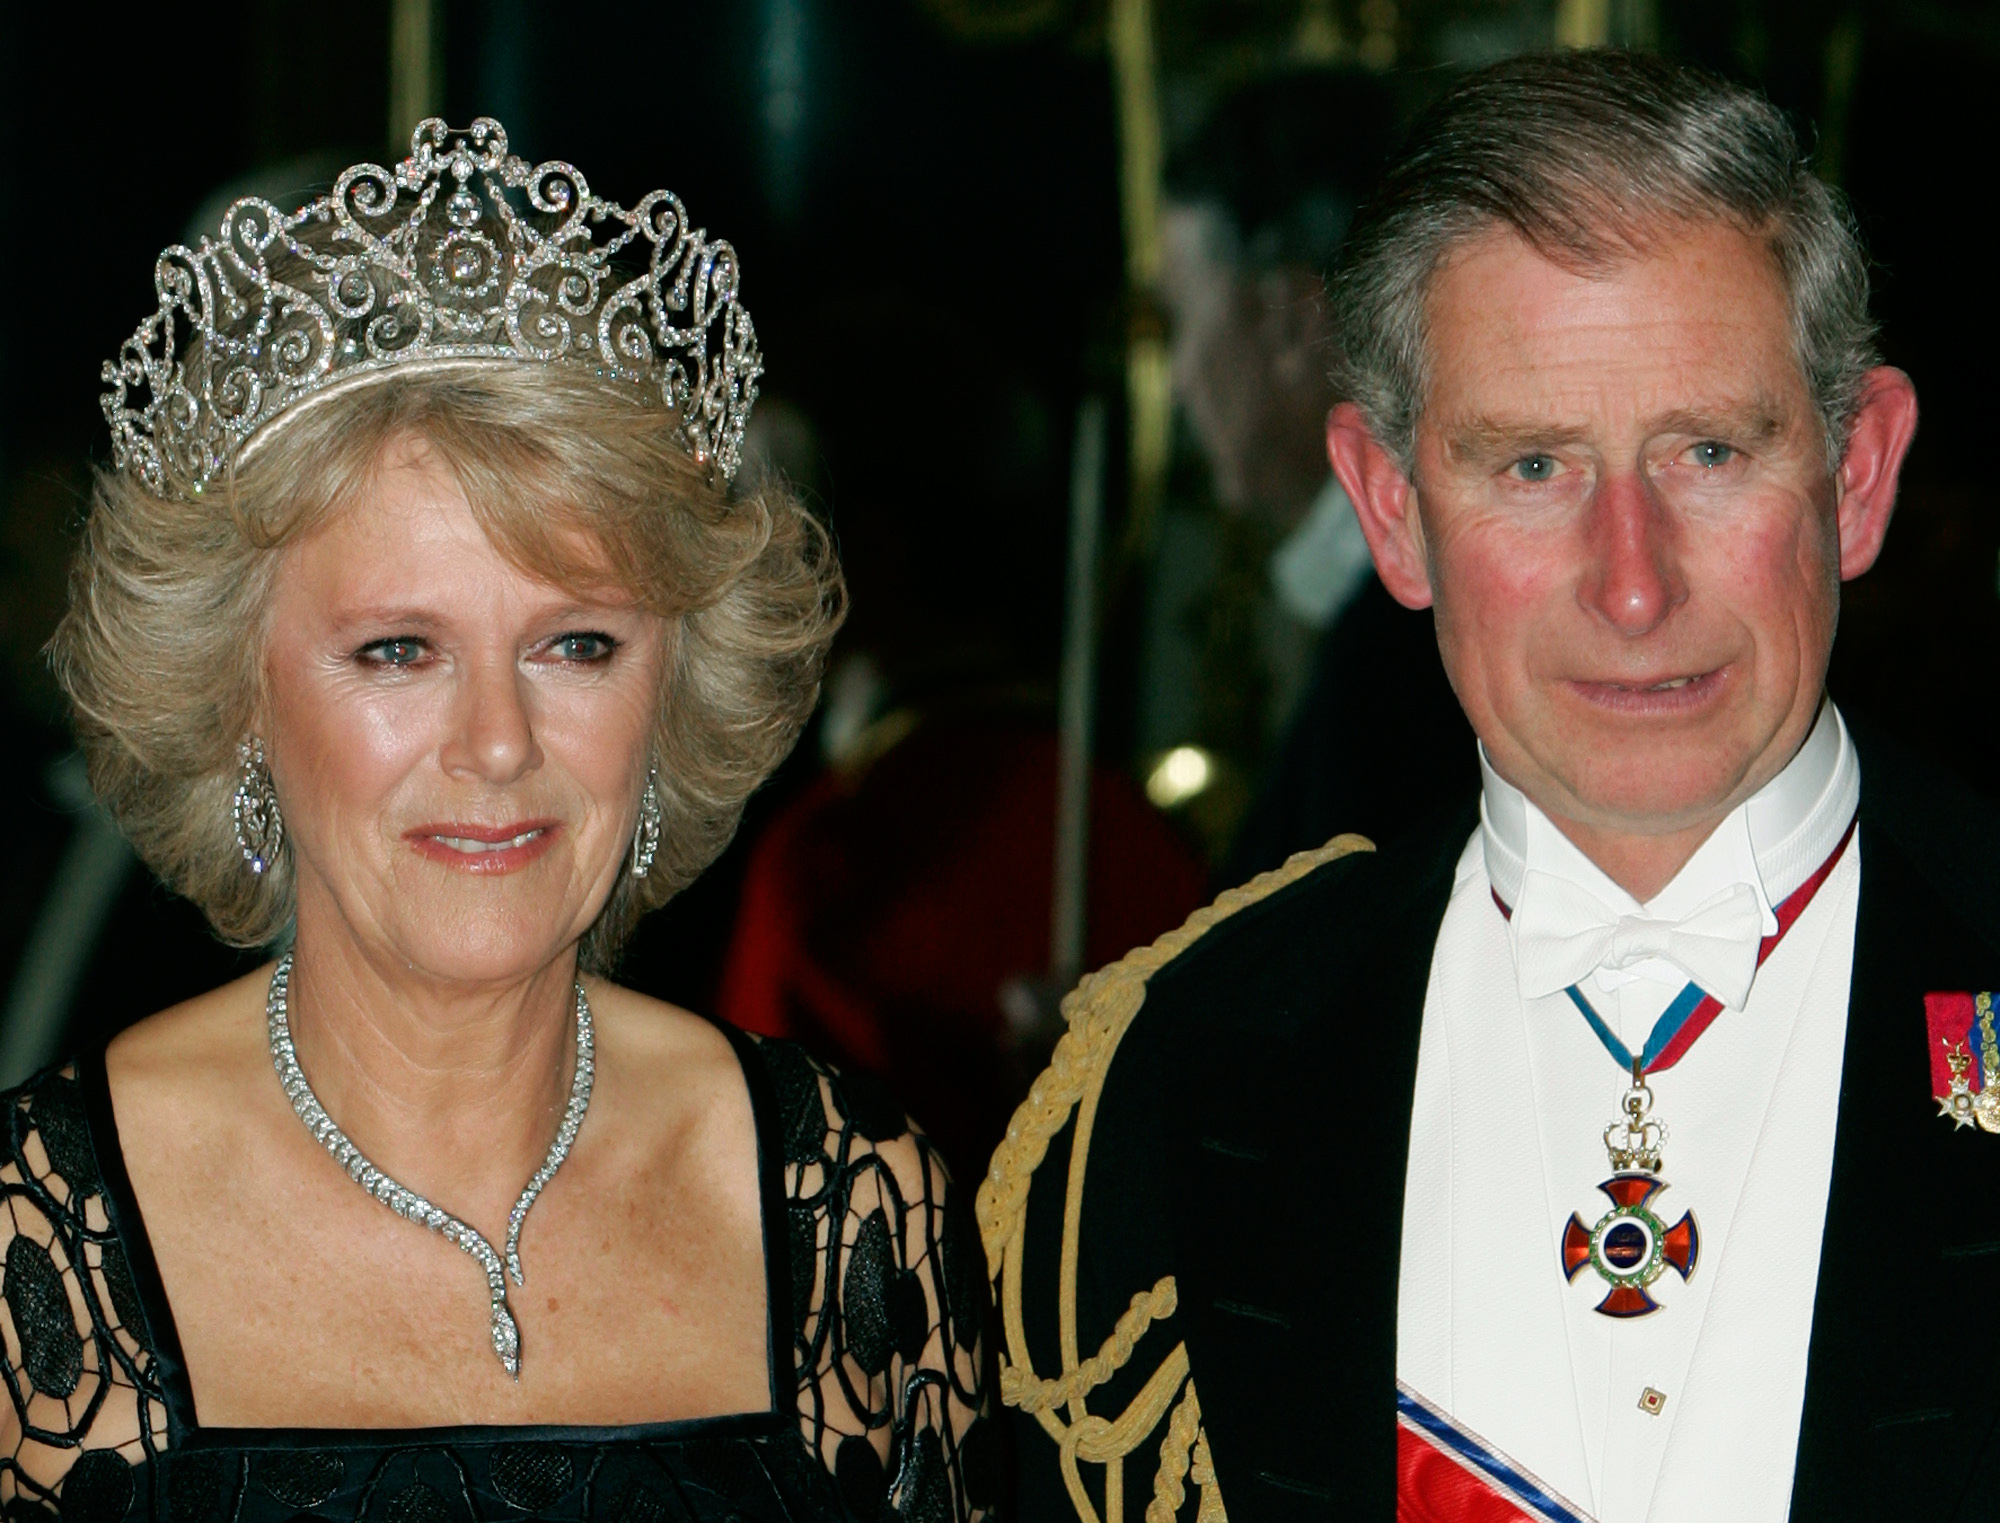 Camilla Parker Bowles wearing a royal heirloom diamond tiara as she and Prince Charles attend a banquet at Buckingham Palace